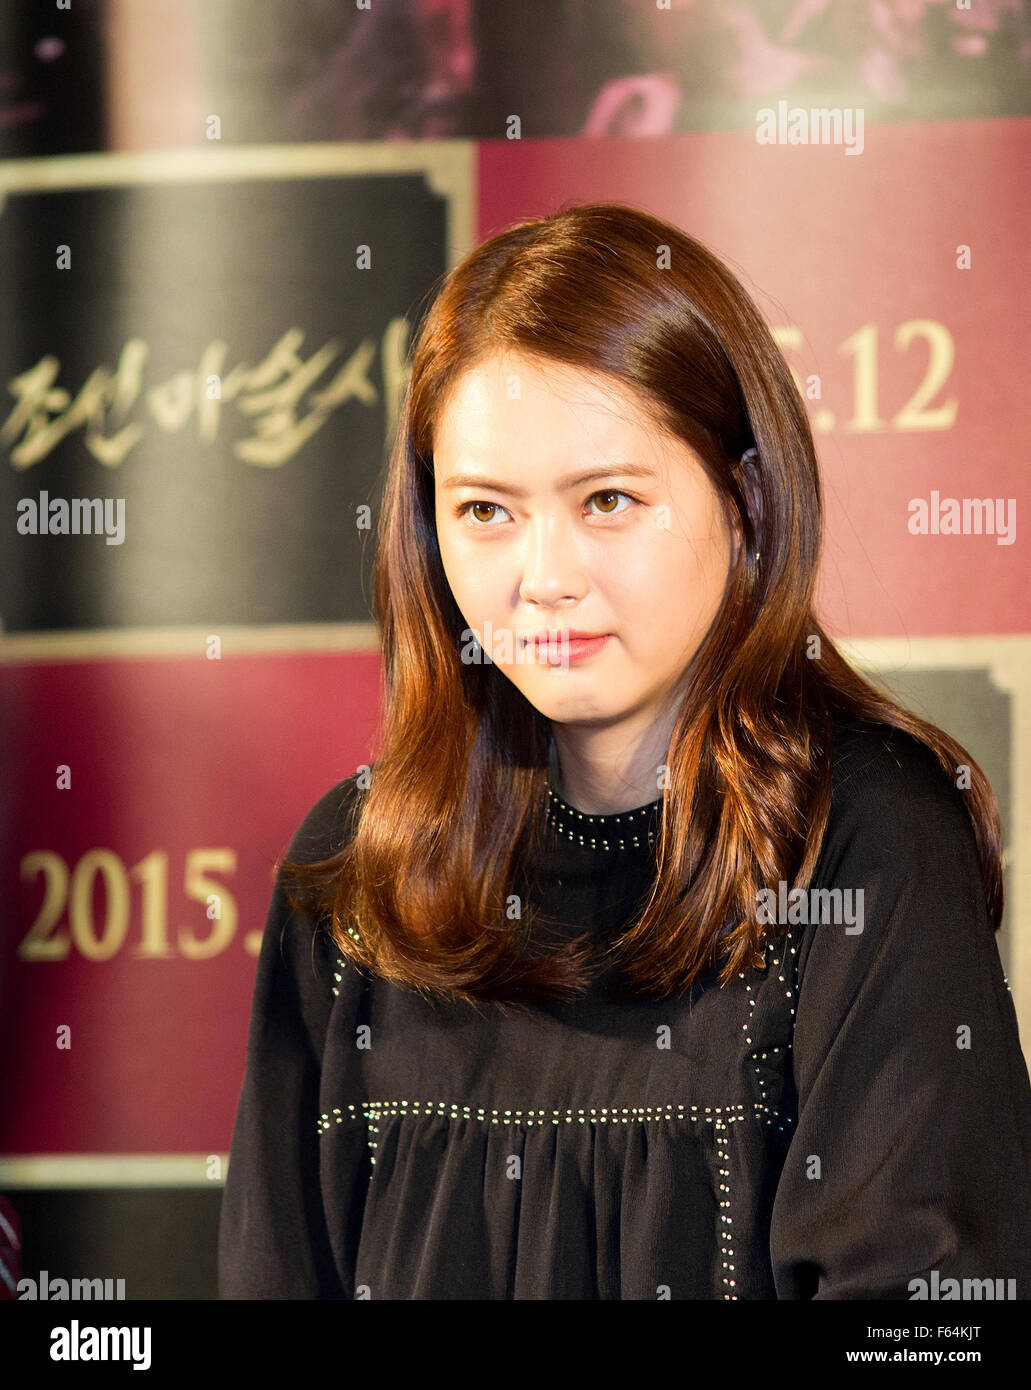 Go Ara, Nov 11, 2015 : South Korean actress Go Ara attends a press presentation for her new movie, "The Joseon Magician" in Seoul, South Korea. © Lee Jae-Won/AFLO/Alamy Live News Stock Photo